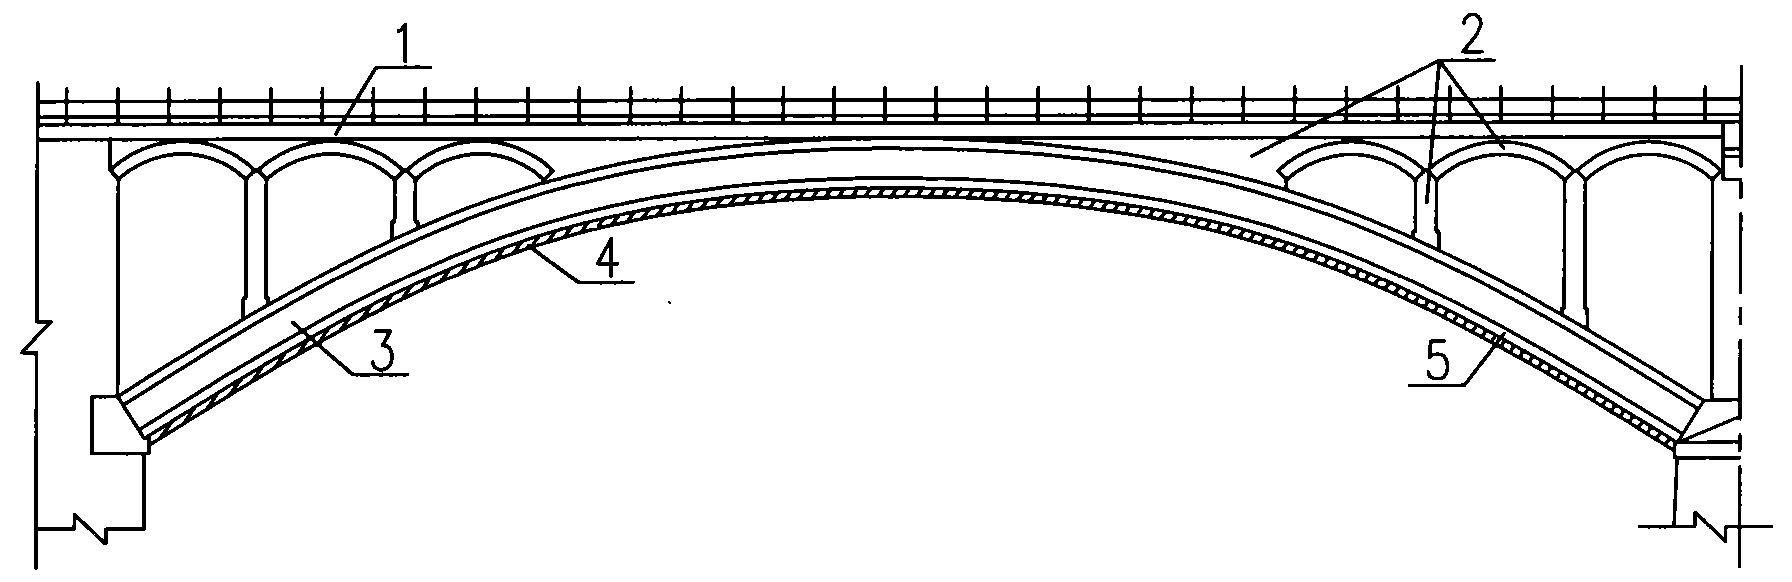 cn101289837b_以箱形截面替代肋形主拱圈截面加固双曲拱桥的方法有效